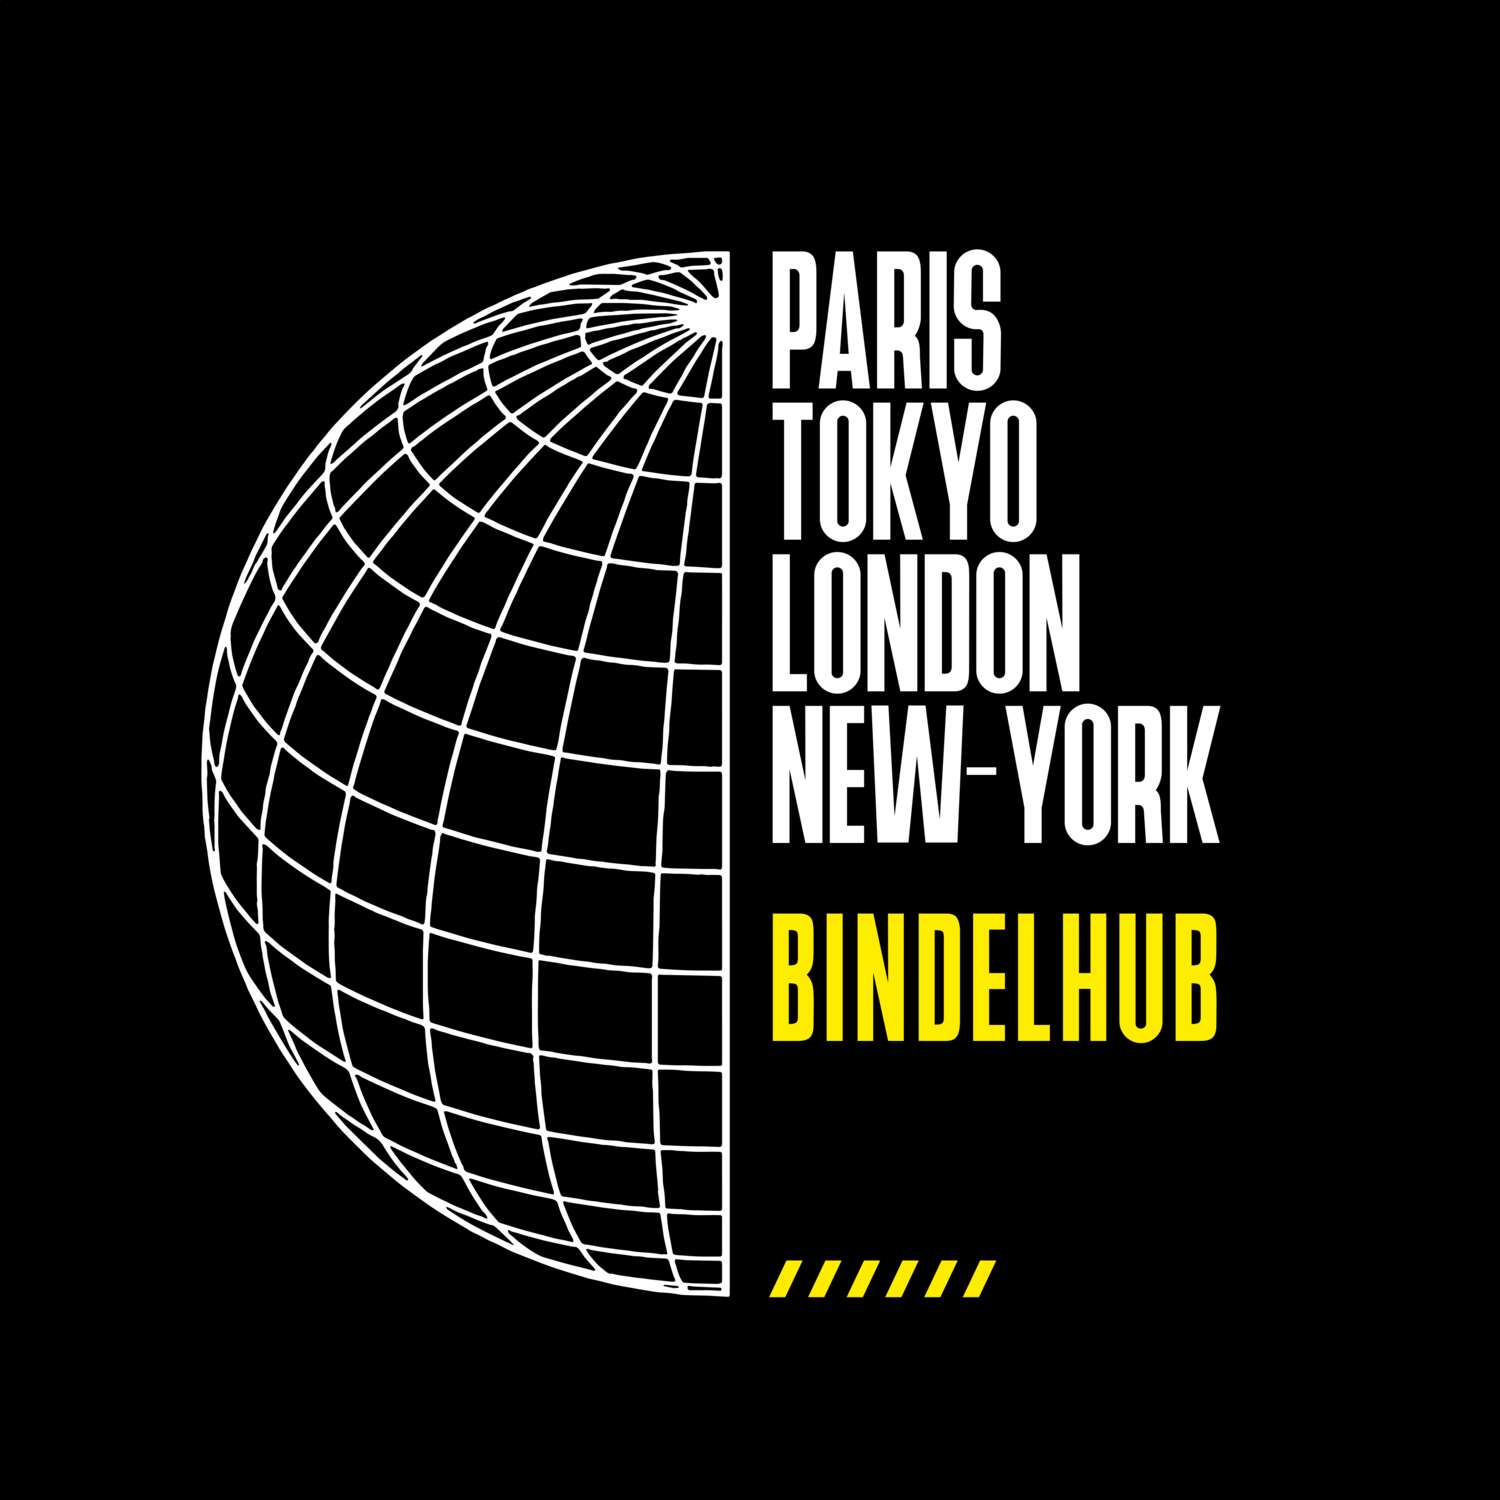 Bindelhub T-Shirt »Paris Tokyo London«